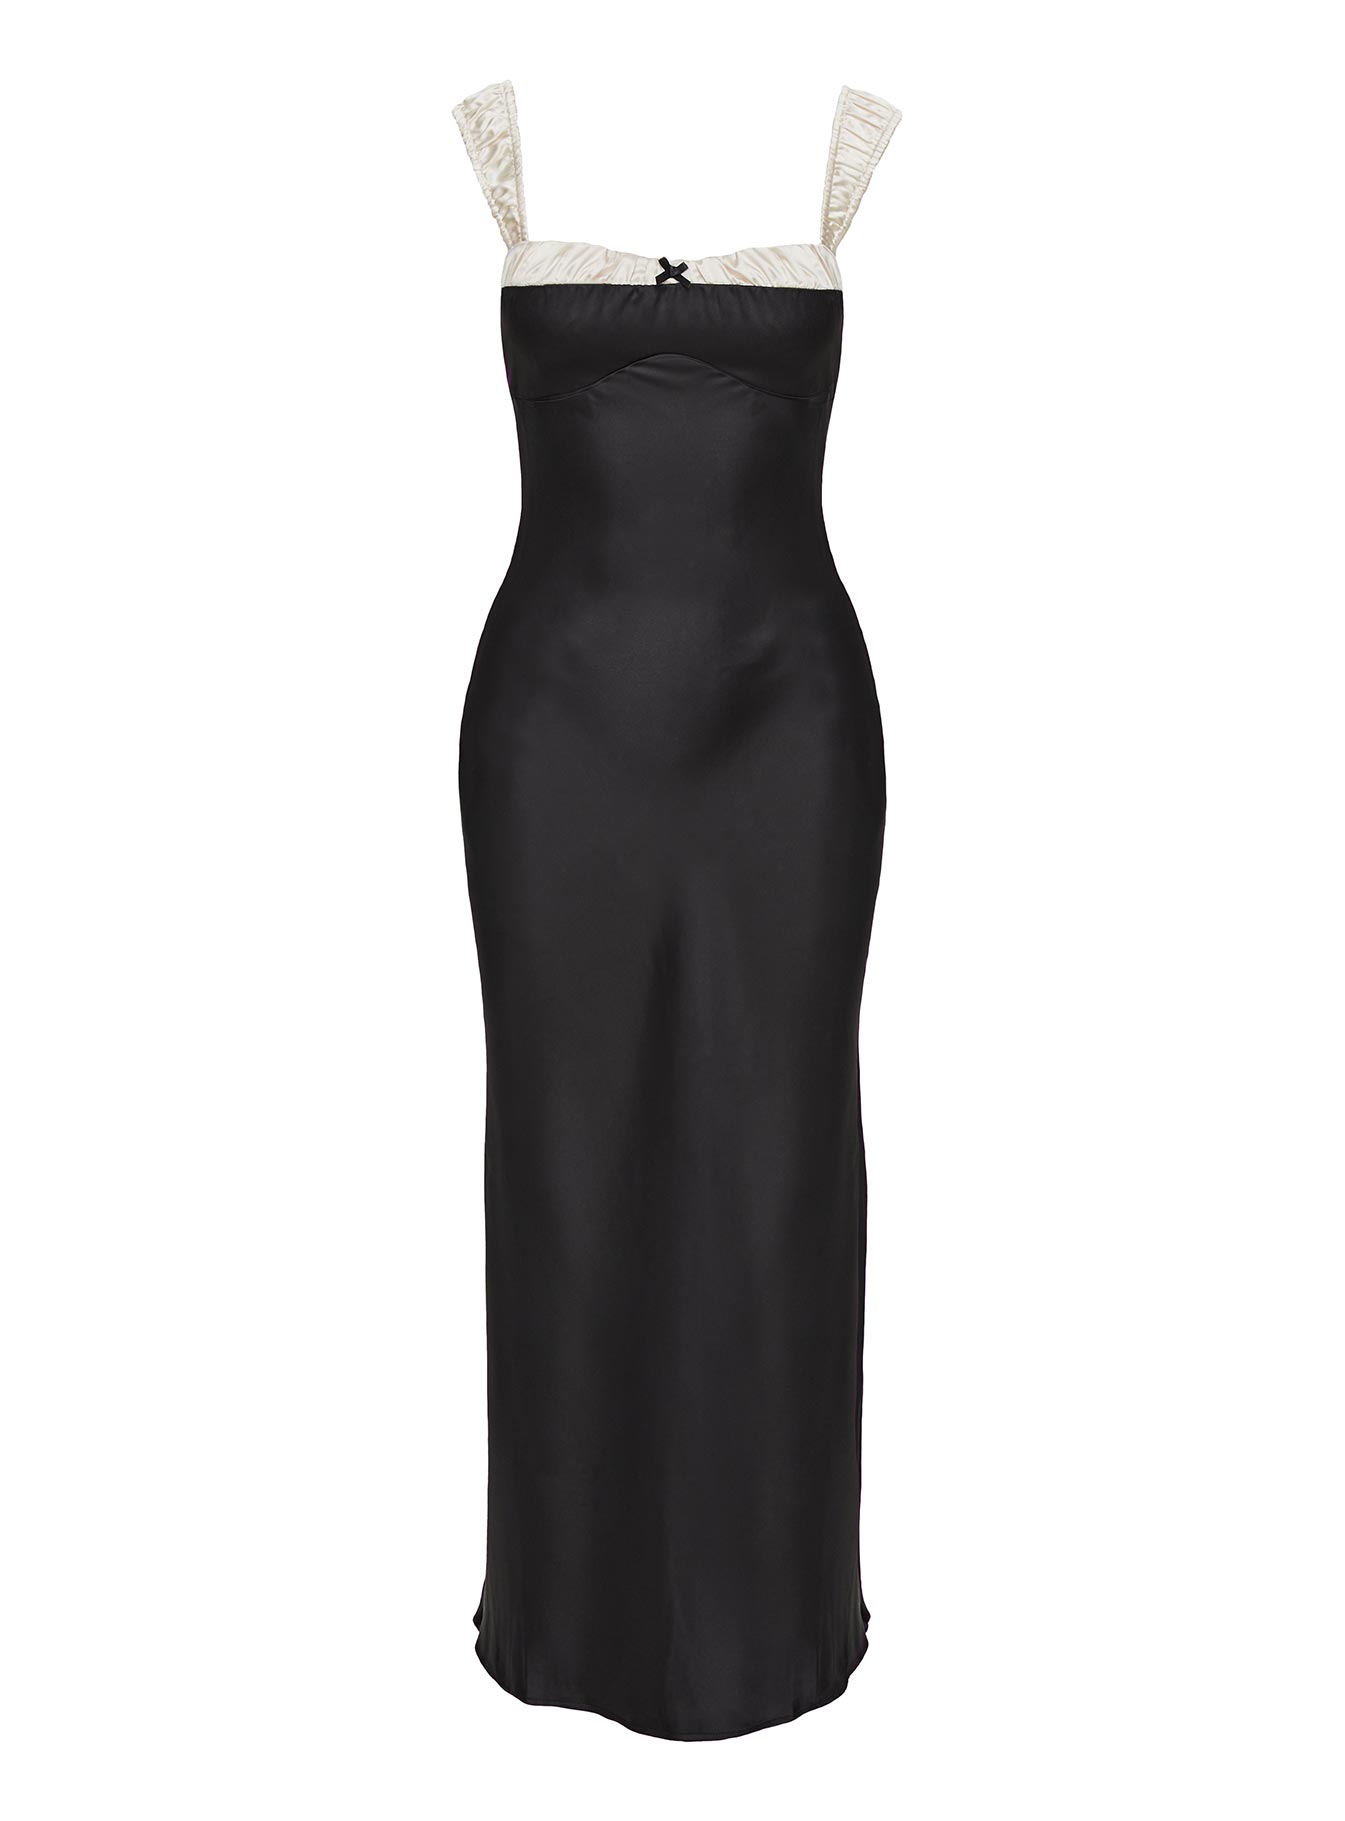 Shop Formal Dress - Emmert Maxi Dress Black third image